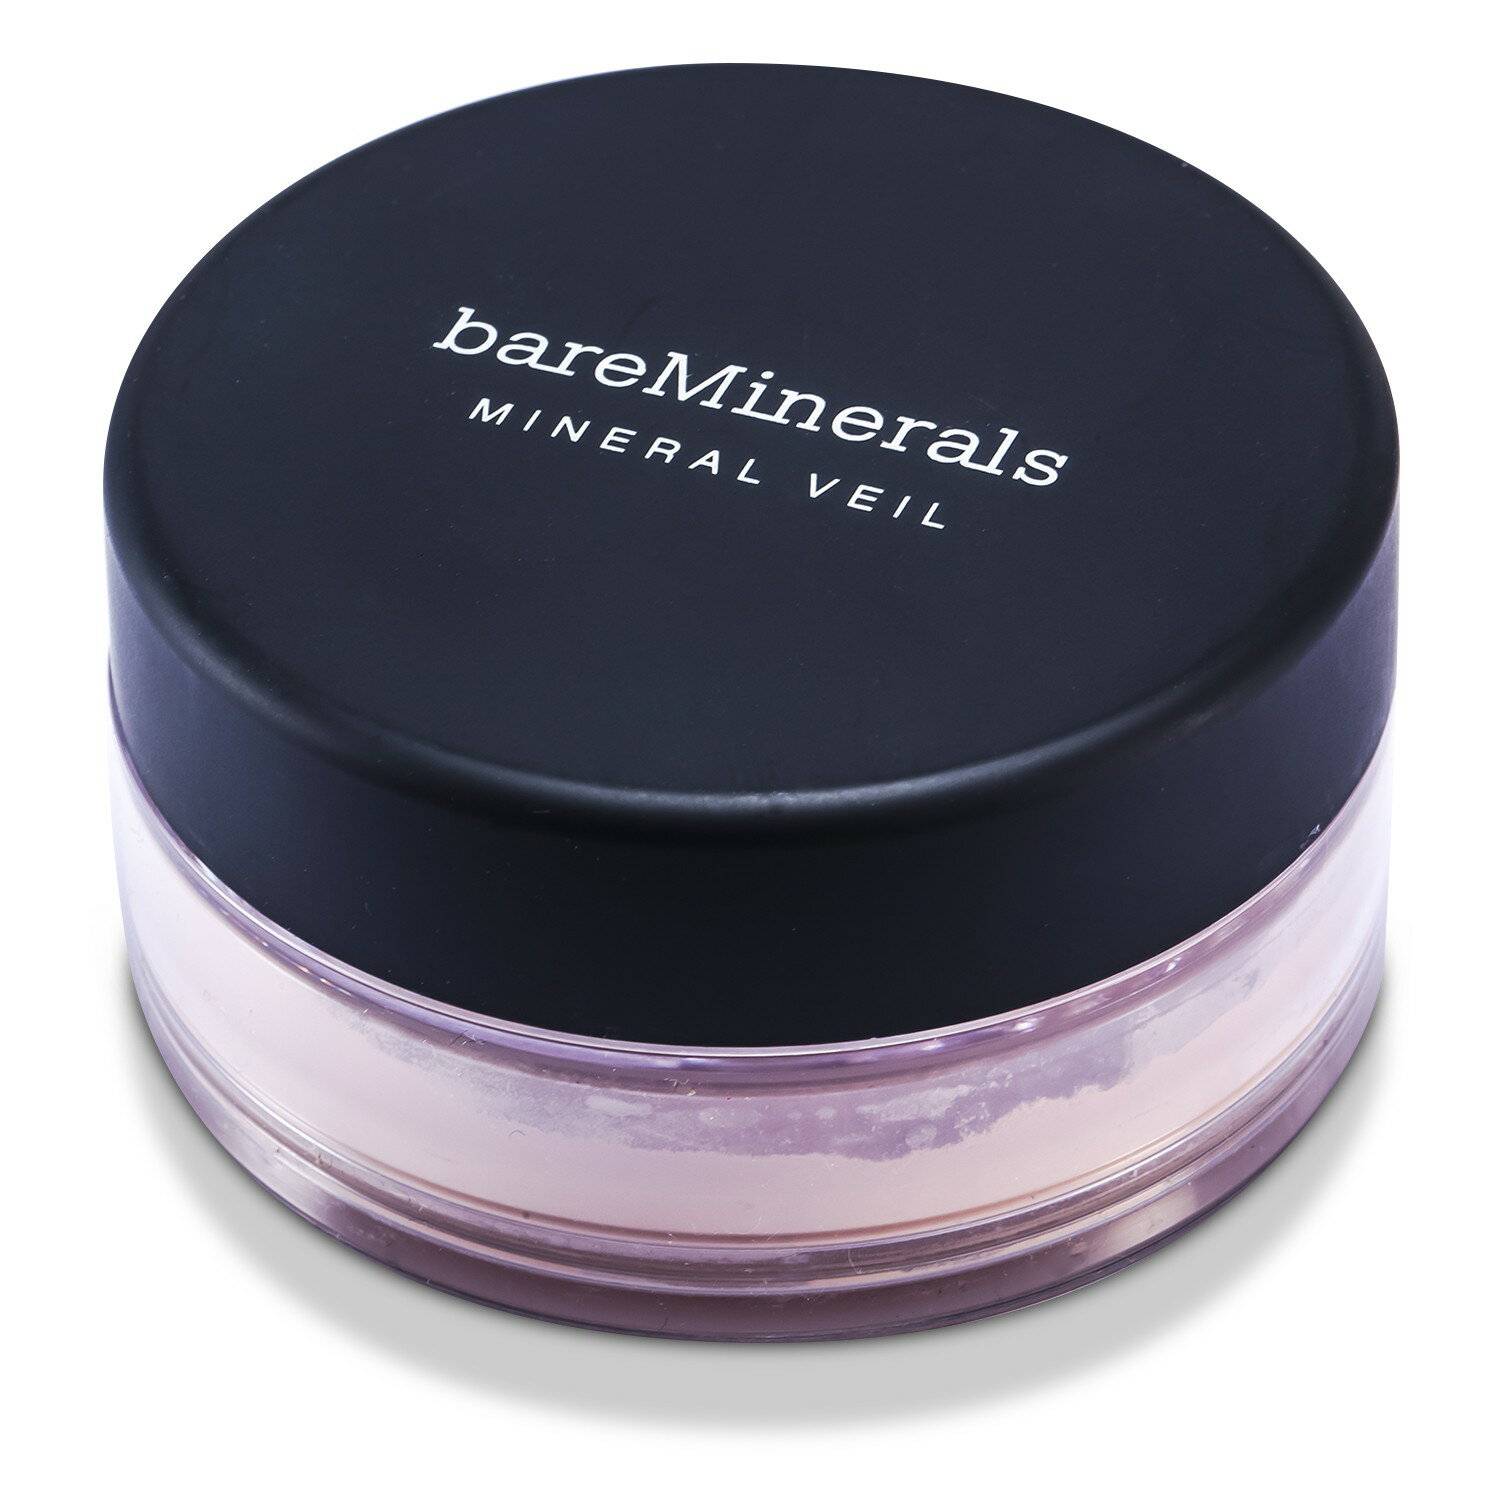 BareMinerals - 礦物遮瑕蜜粉 Mineral Veil